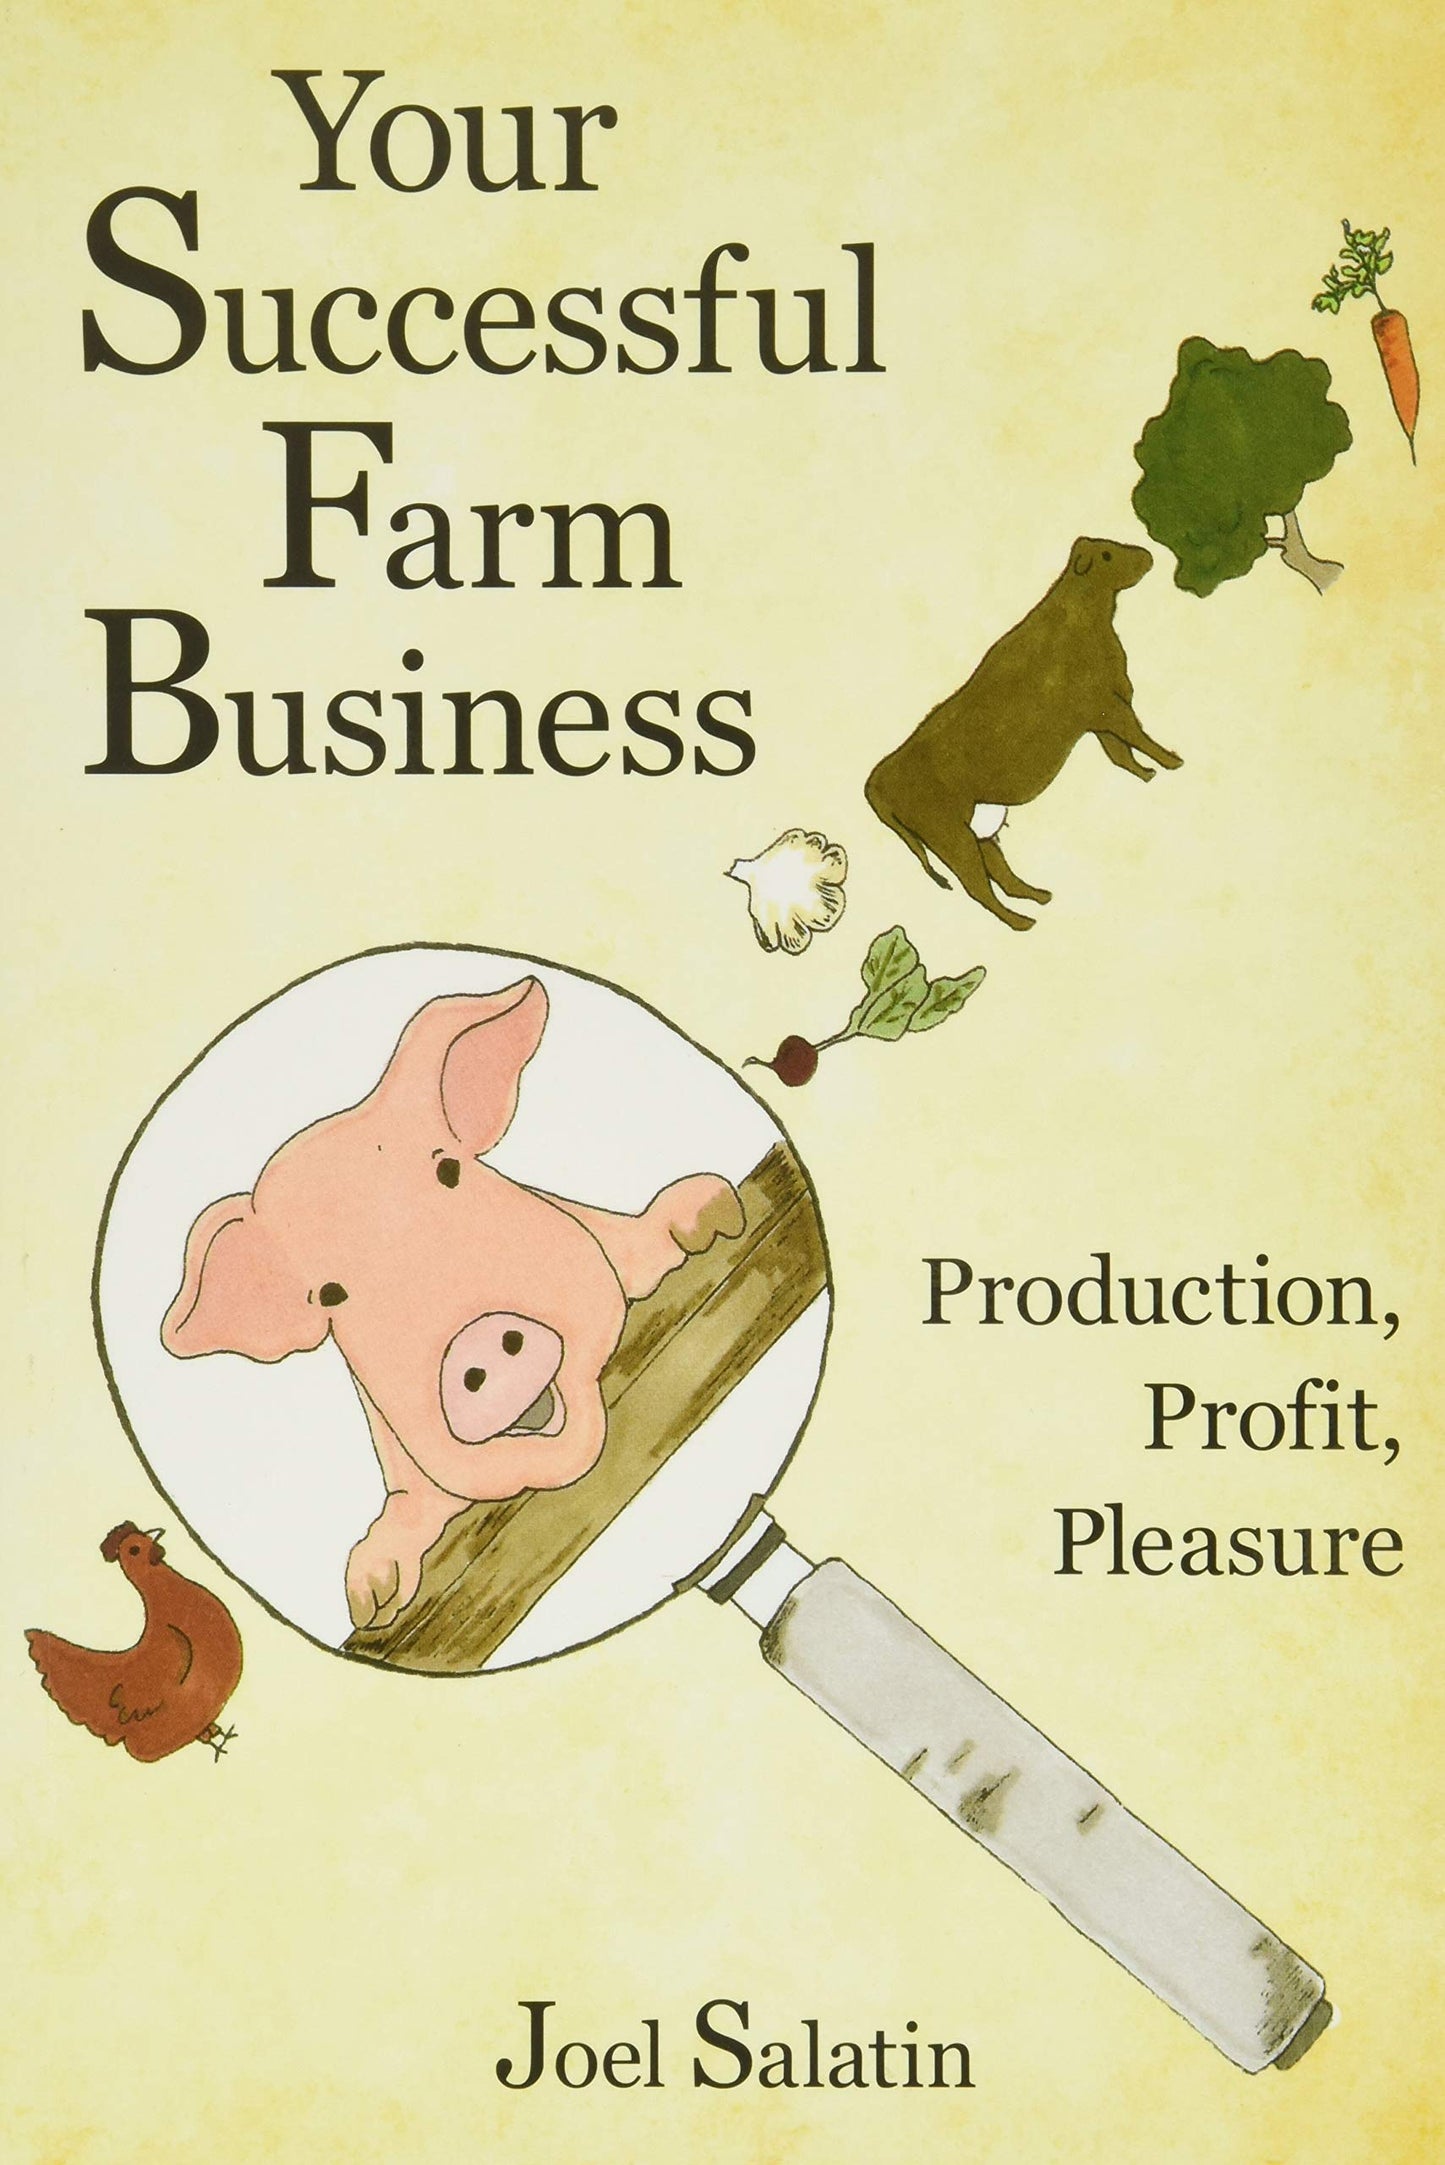 Your Successful Farm Business: Production, Profit, Pleasure by Joel Salatin